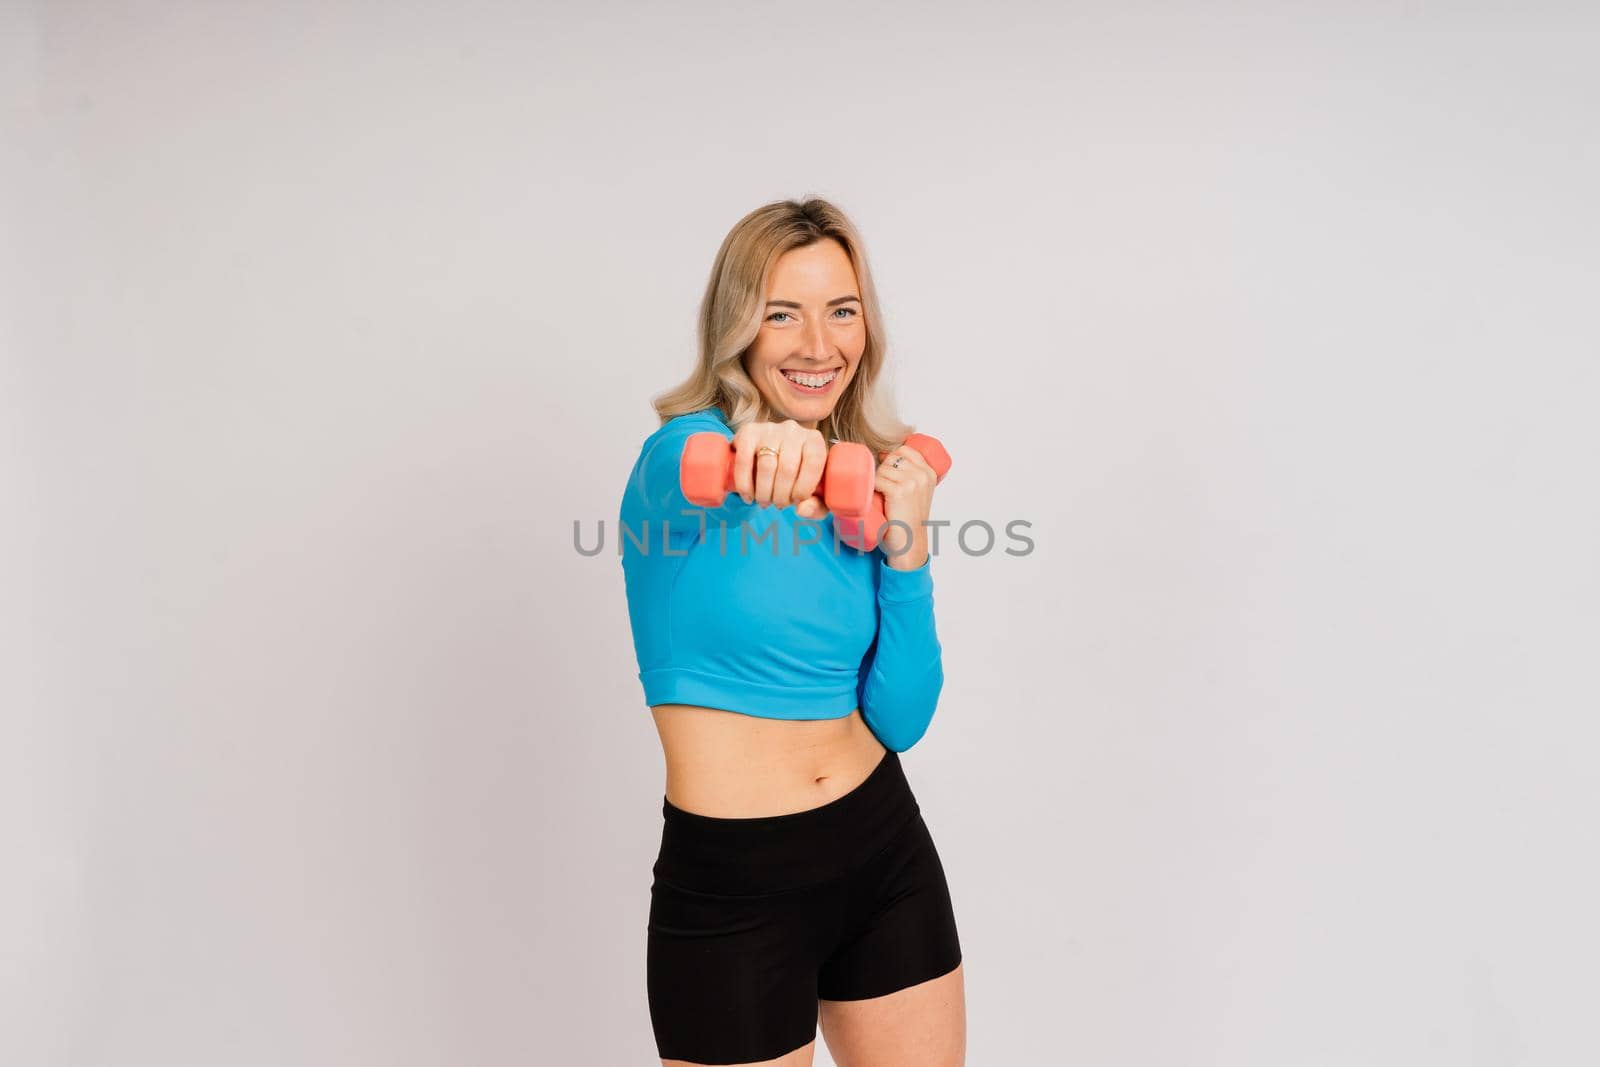 Sporty girl doing exercise with dumbbells, silhouette studio shot over dark and whitebackground by Zelenin